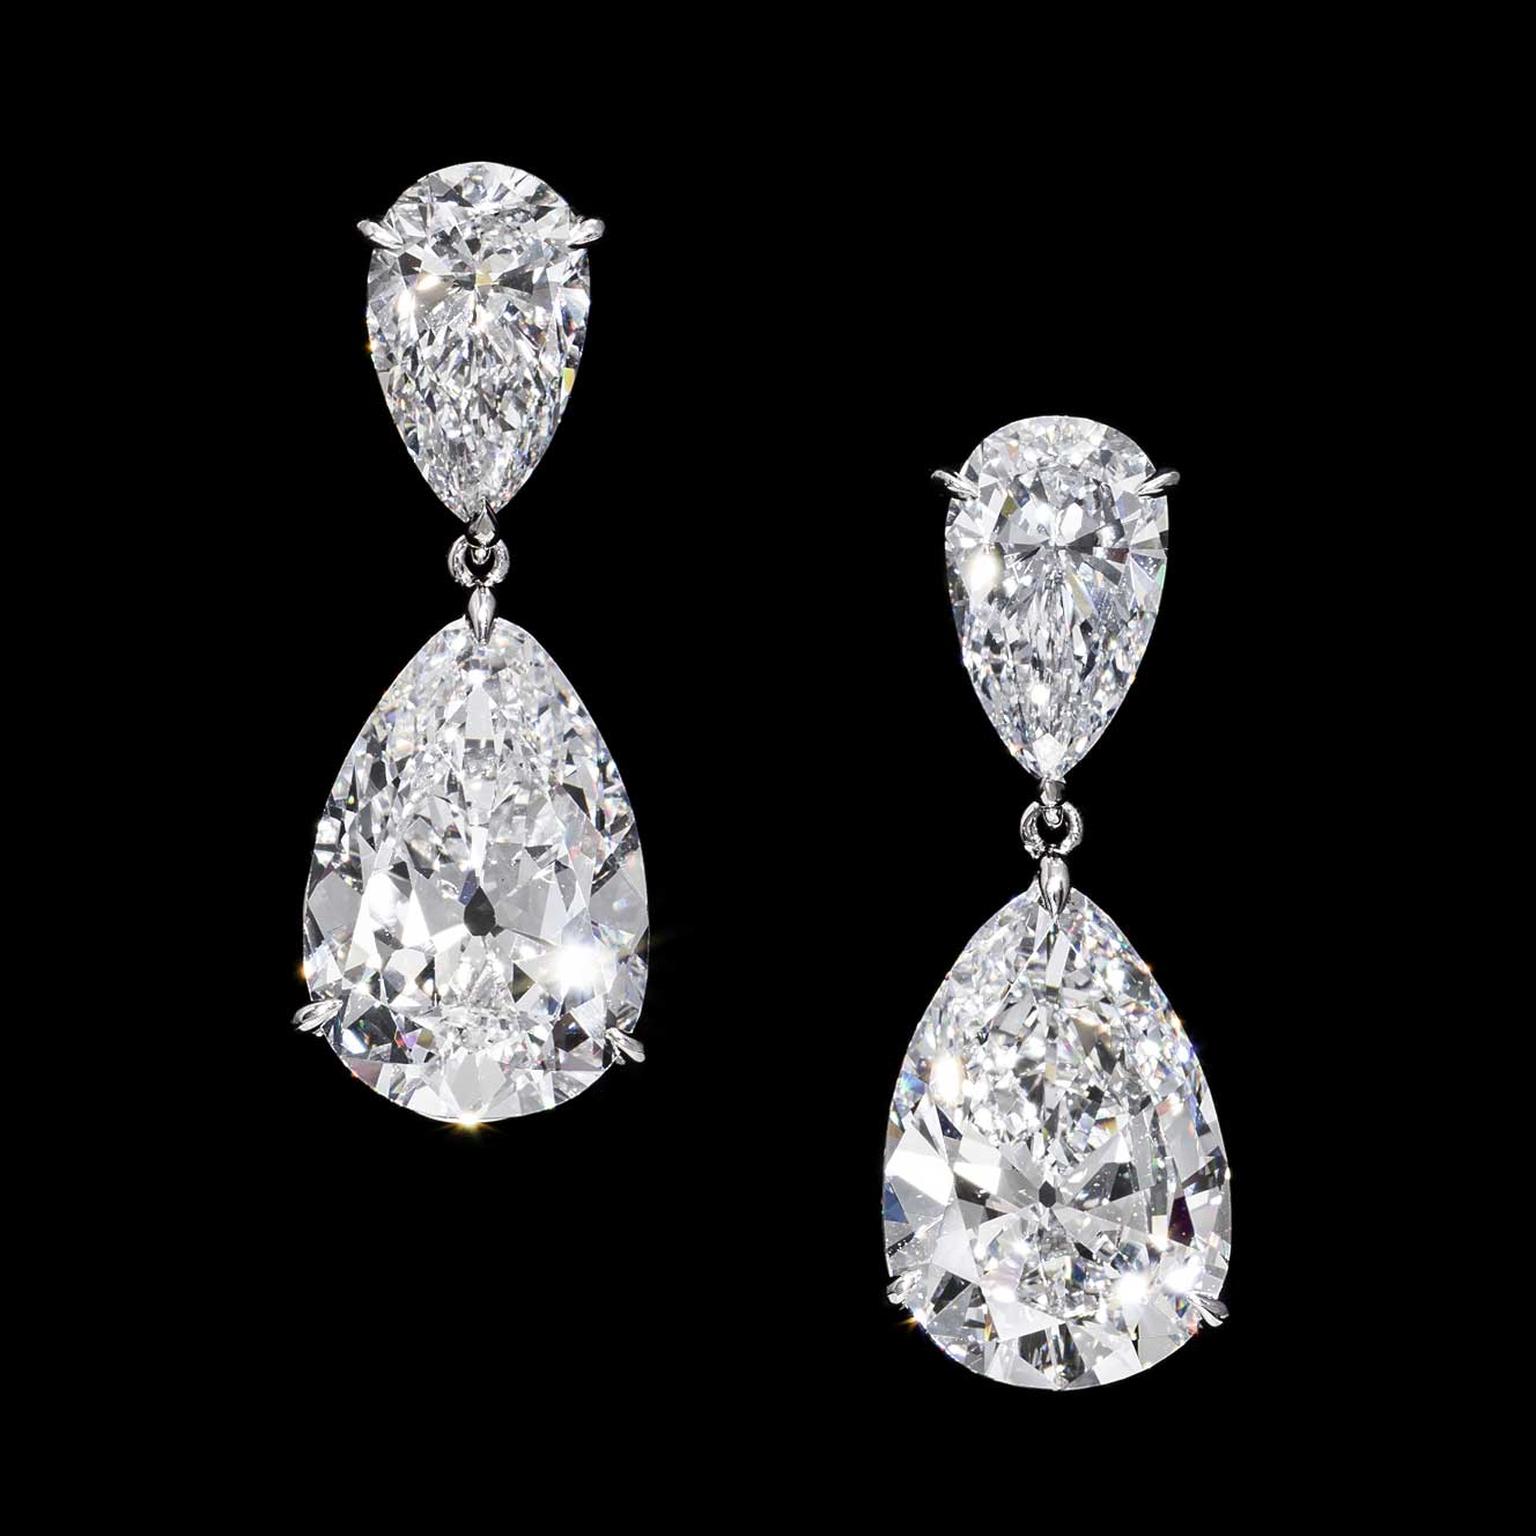 Jahan pear-shape diamond earrings